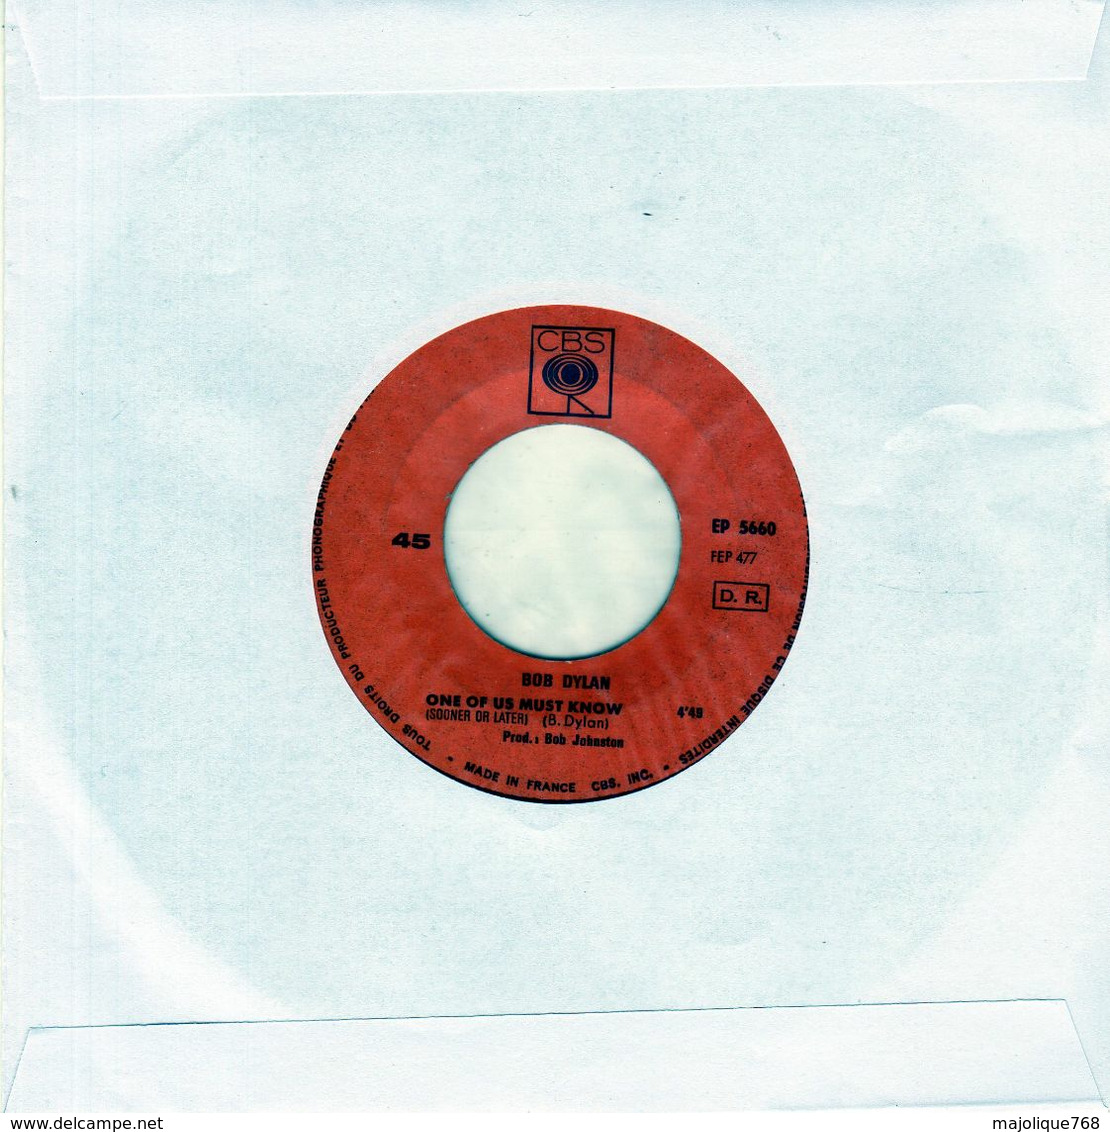 Disque  45 T - SP - Bob Dylan - Rainy Day Women - CBS EP 5660 - 1966 France - Sans Pochette - - Country Et Folk